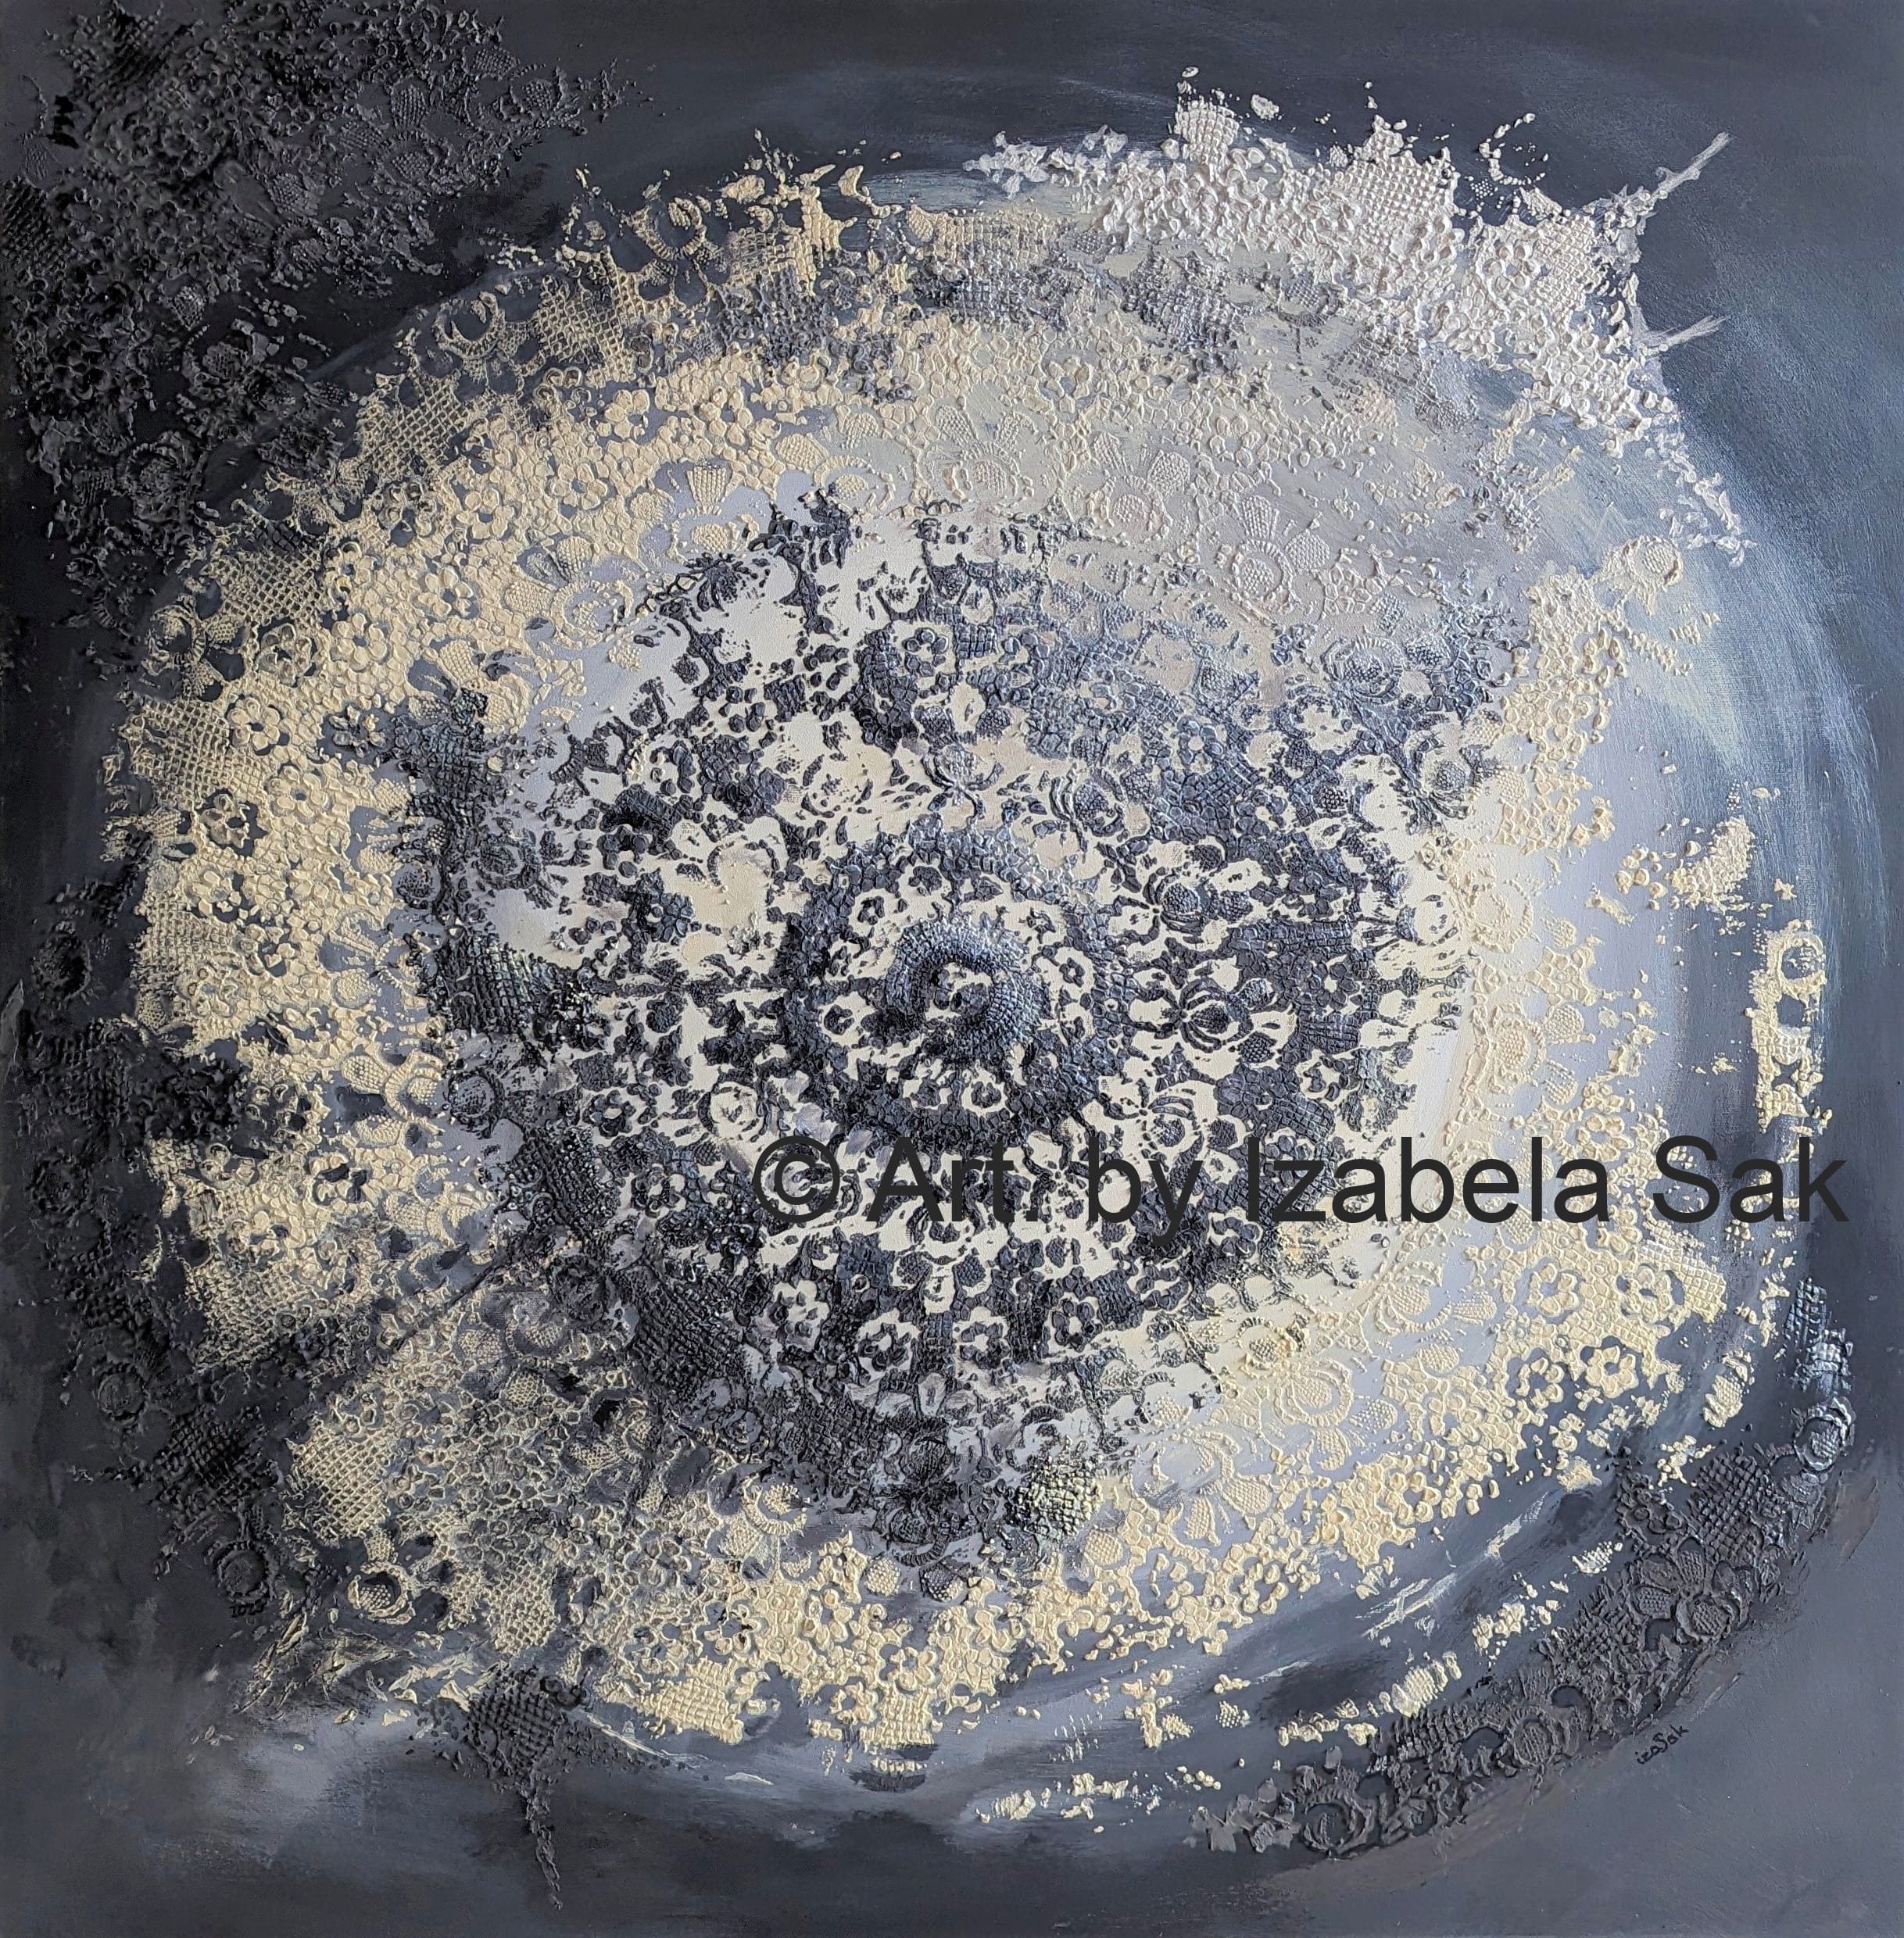 Izabela Sak, Mirage Nr 5, Rok 2023, akryl na płótnie 100 x 100 cm